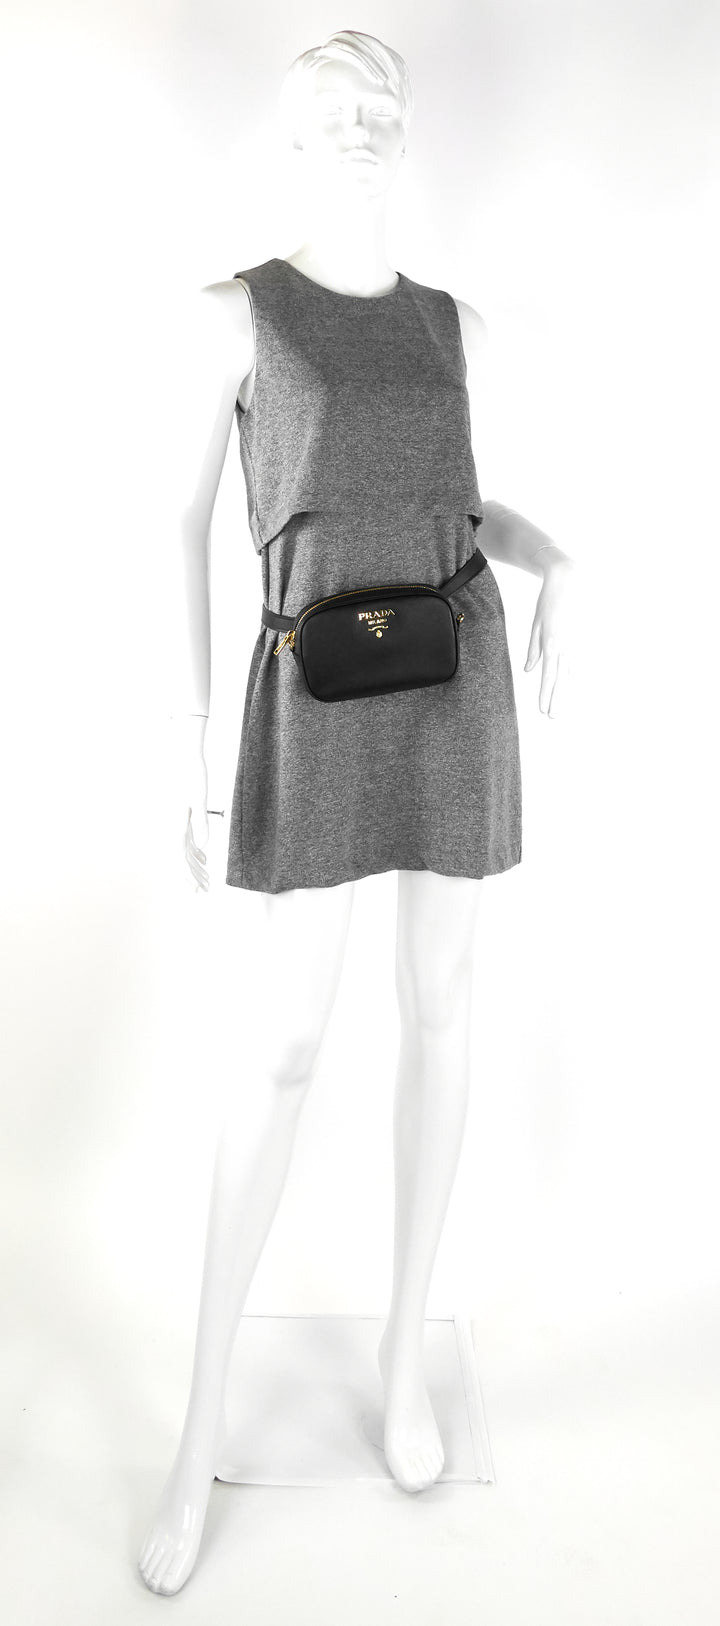 saffiano leather belt bag with detachable chain strap